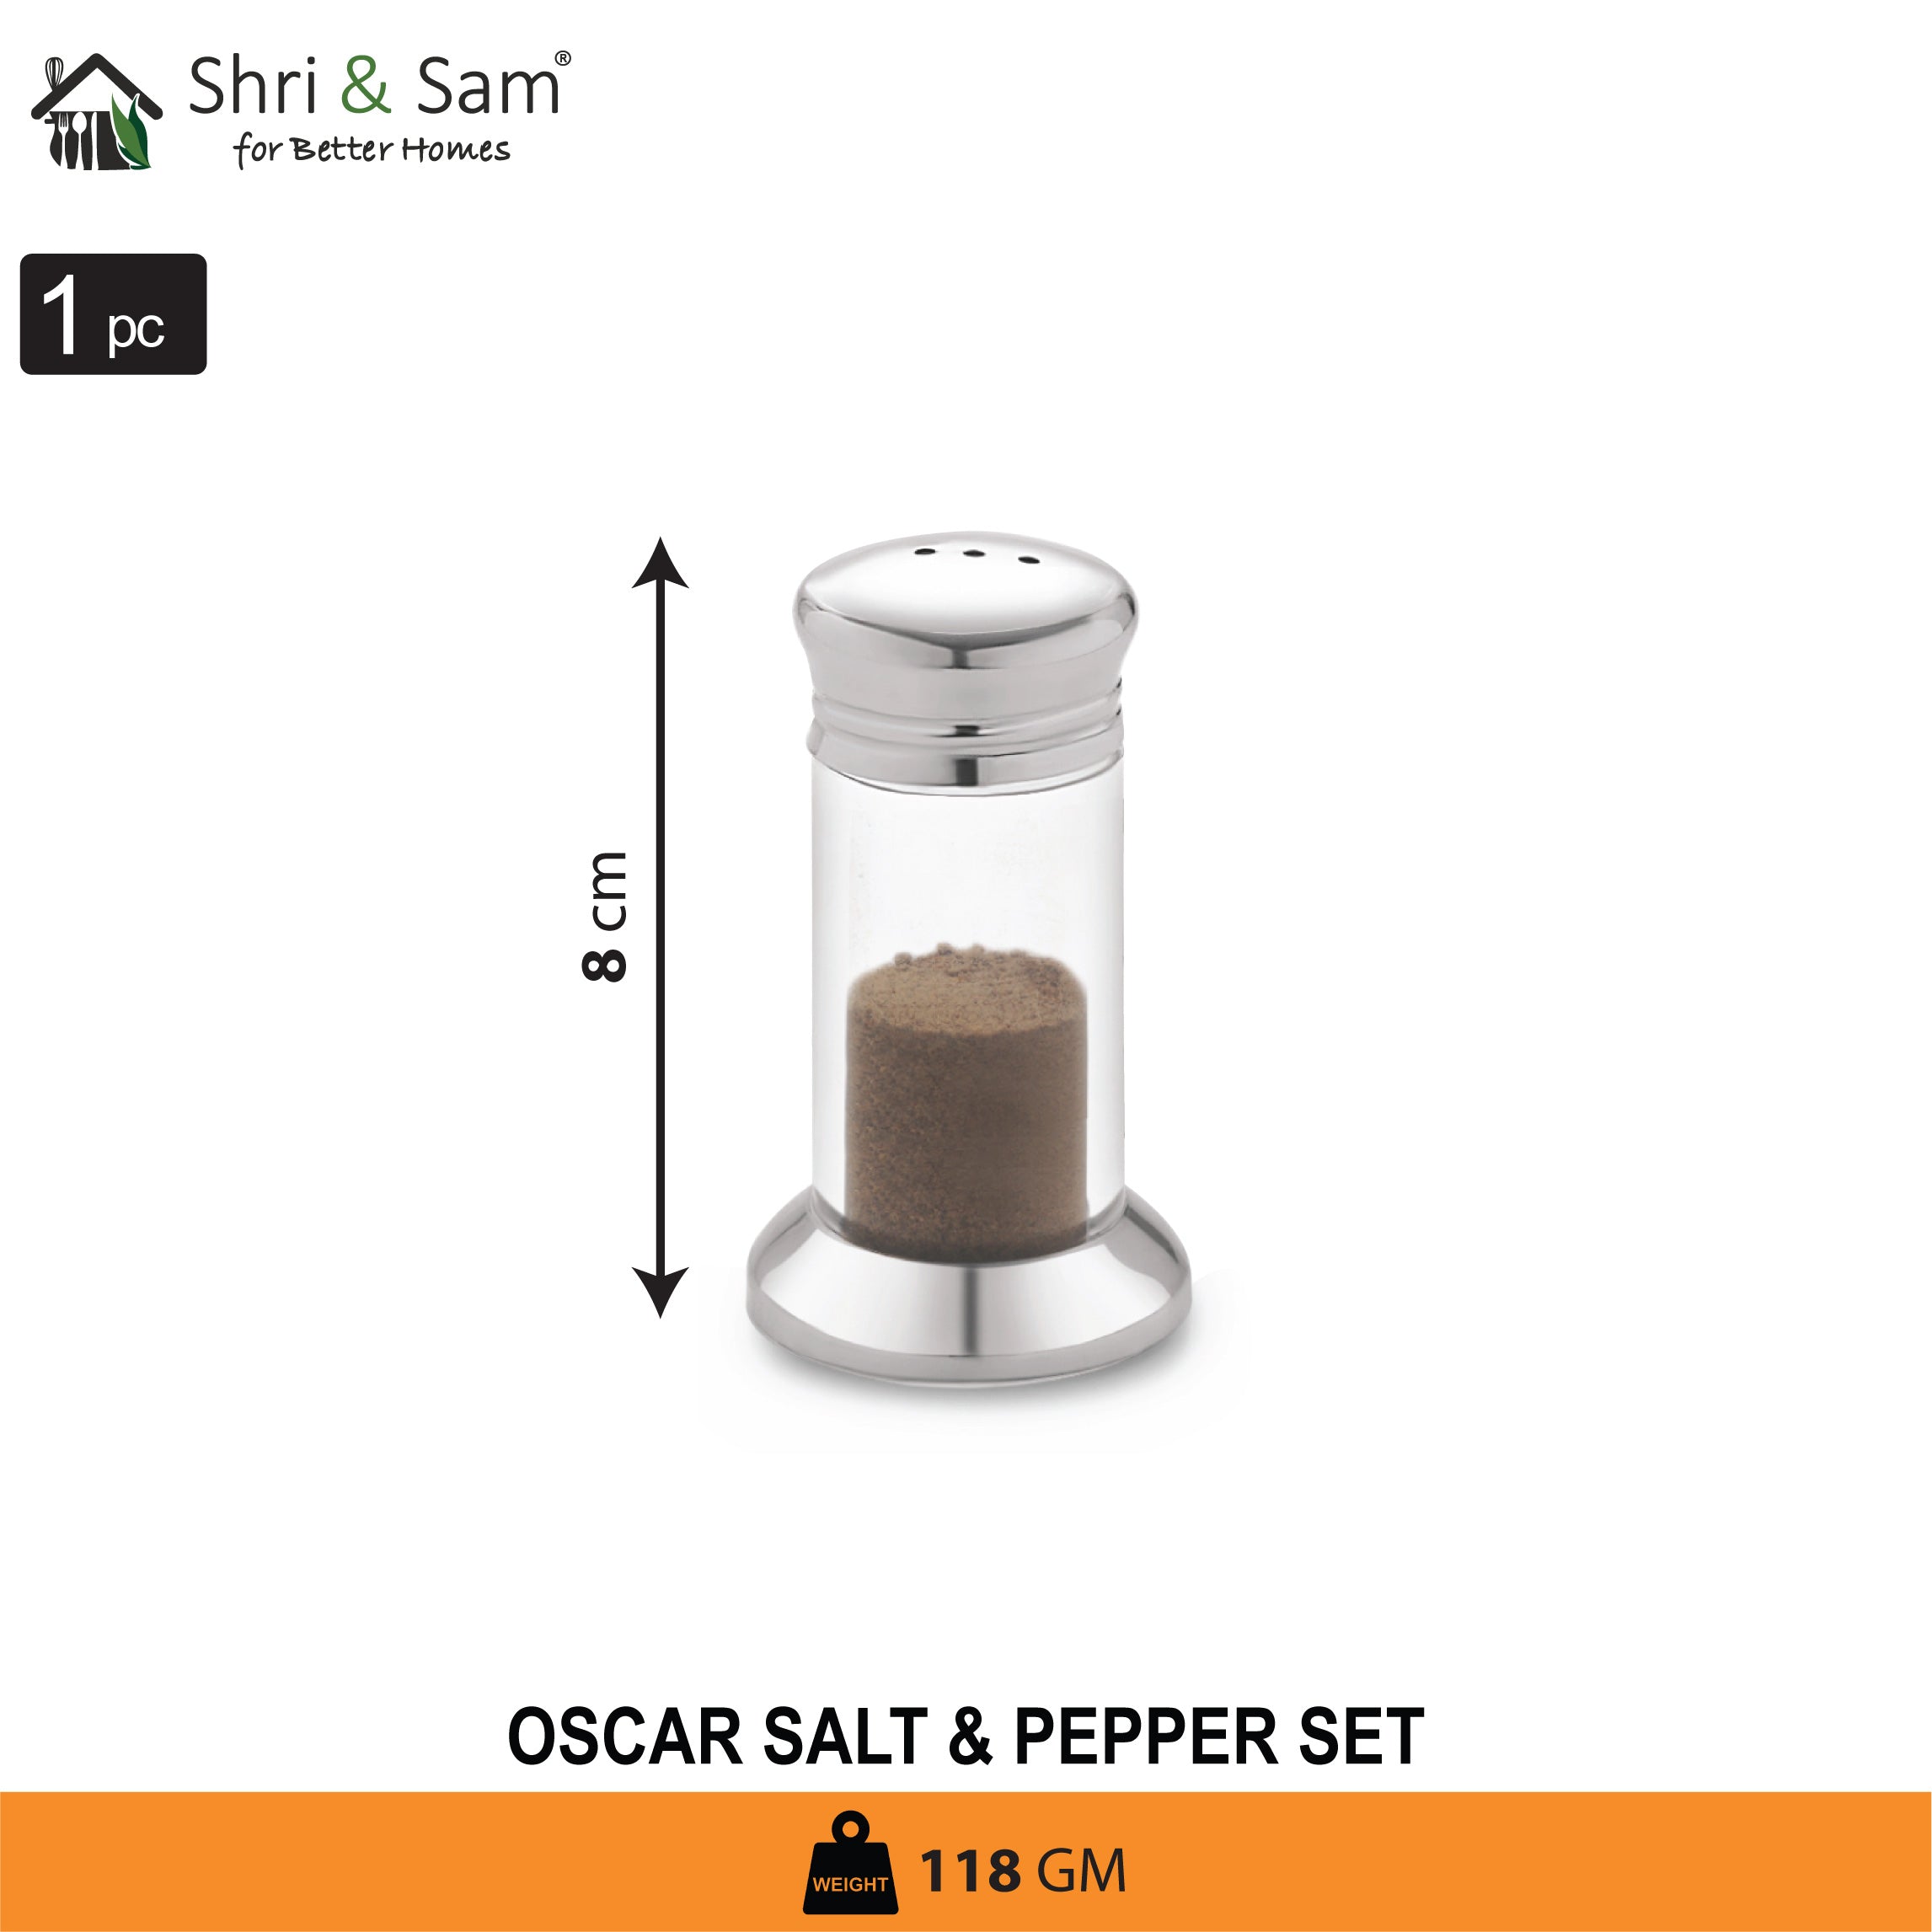 Stainless Steel Oscar Salt & Pepper